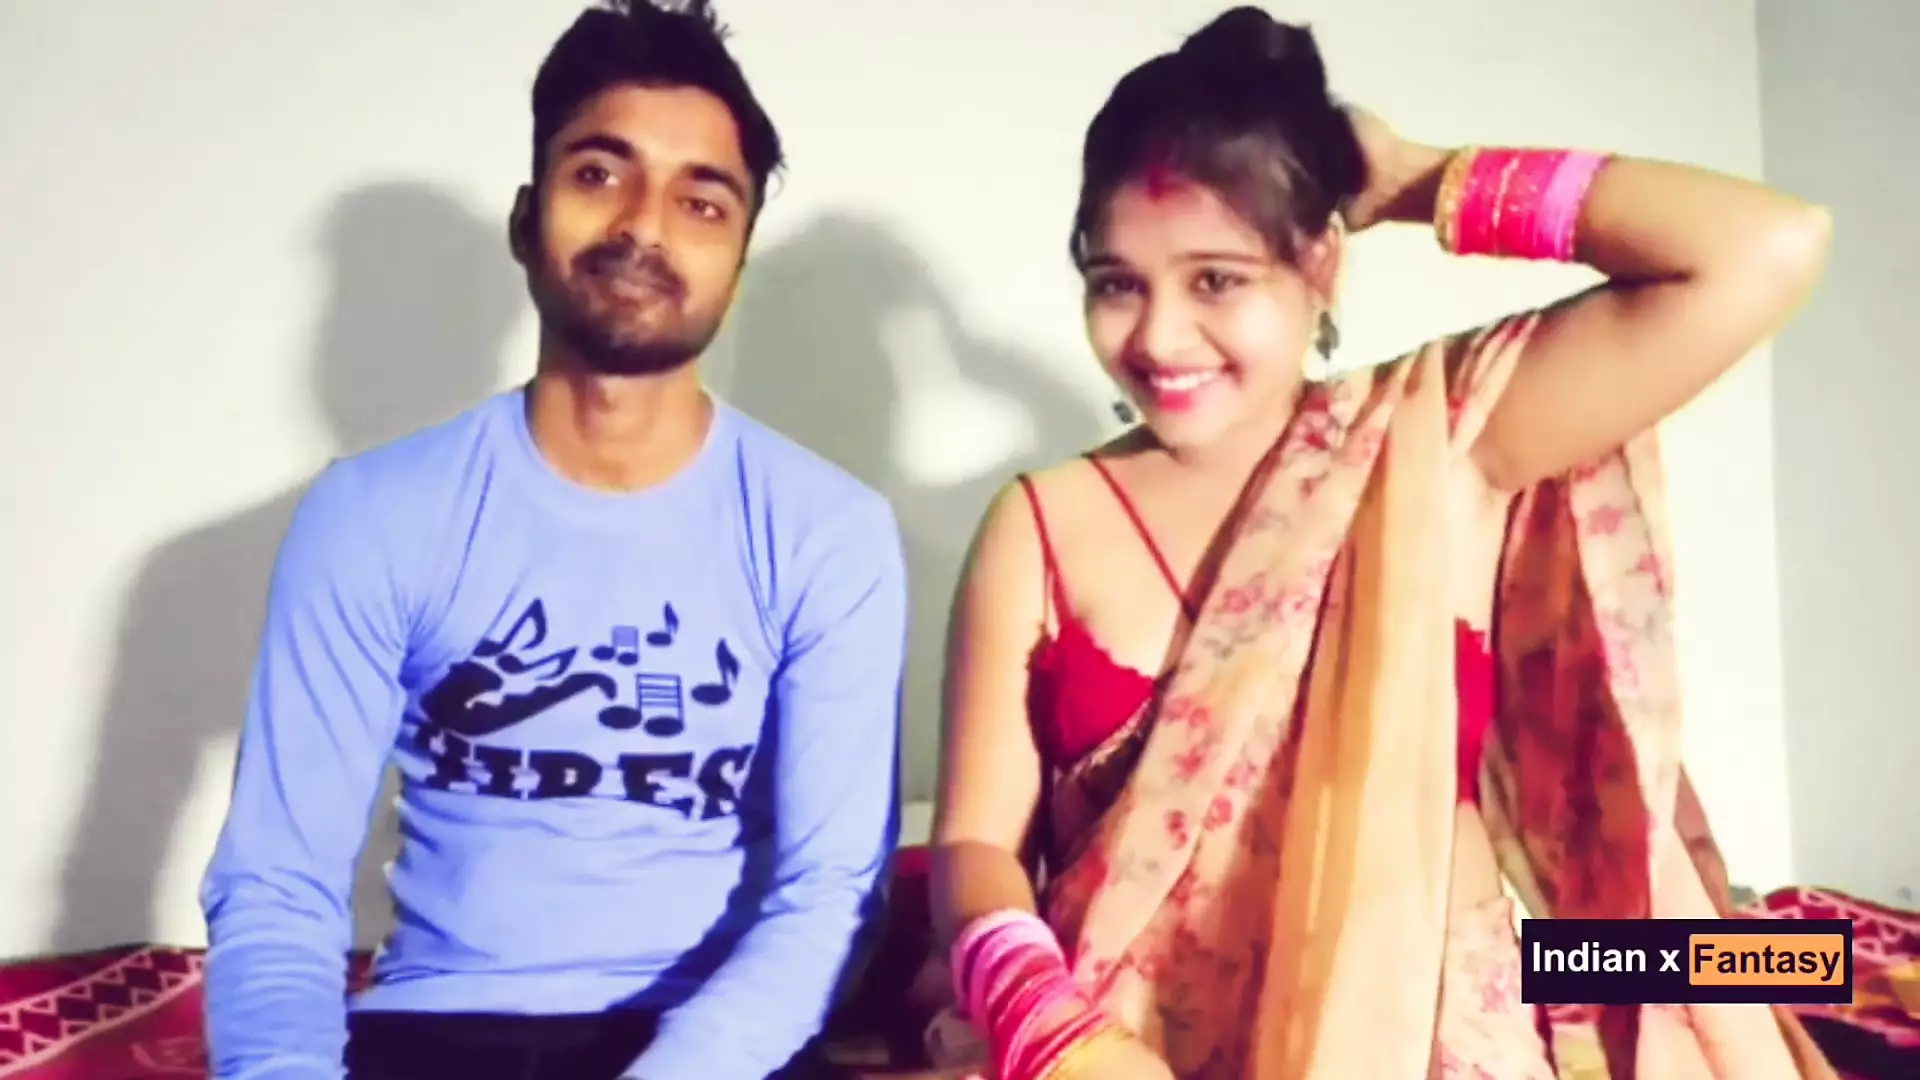 Latest Desi couples hindi chudai mms video small tits bhabhi